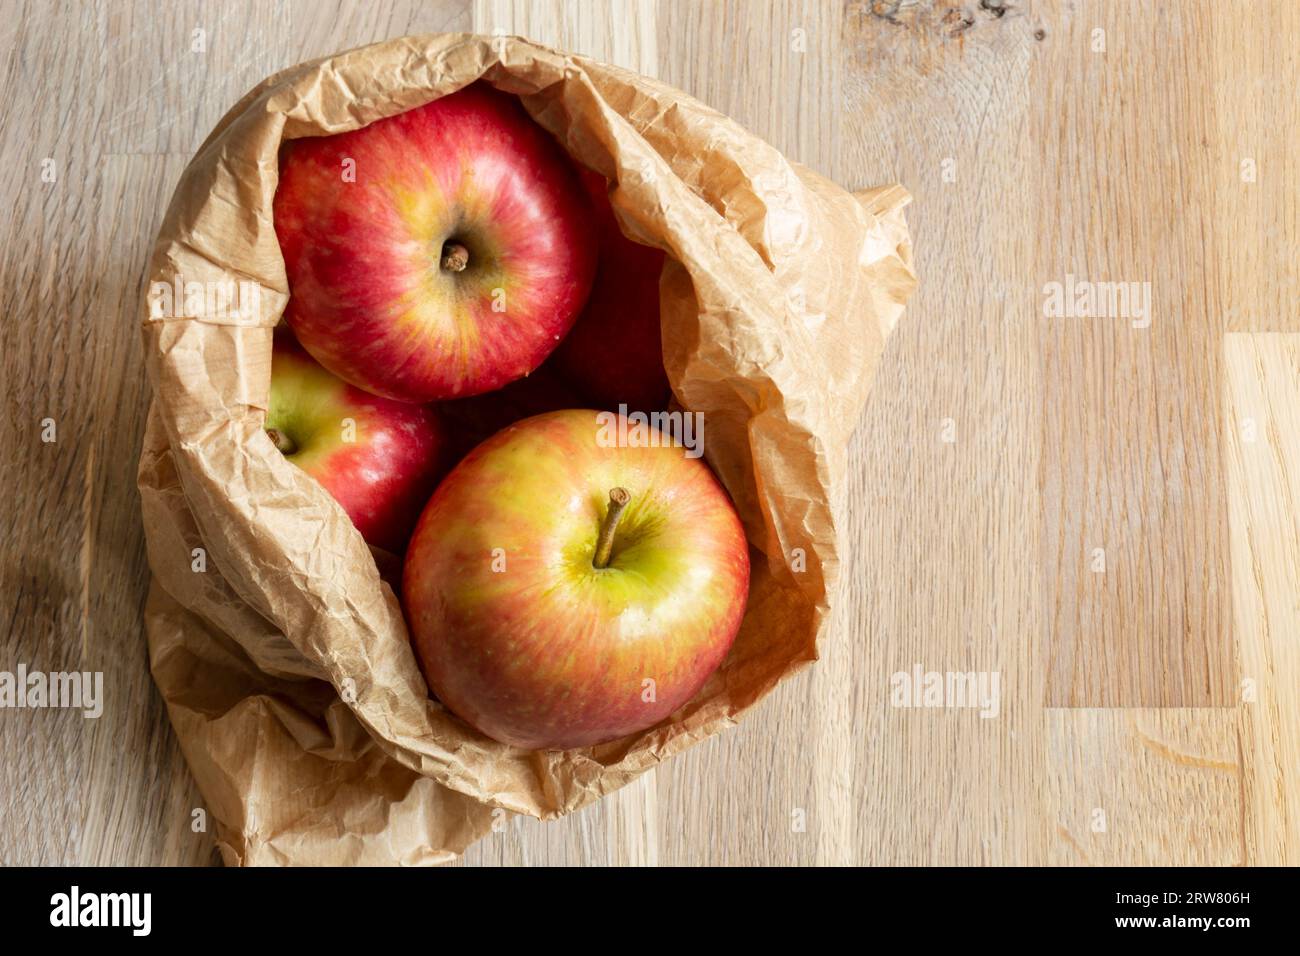 Red Paper Bagged Qinguan Apples - China Apple, FUJI Apple